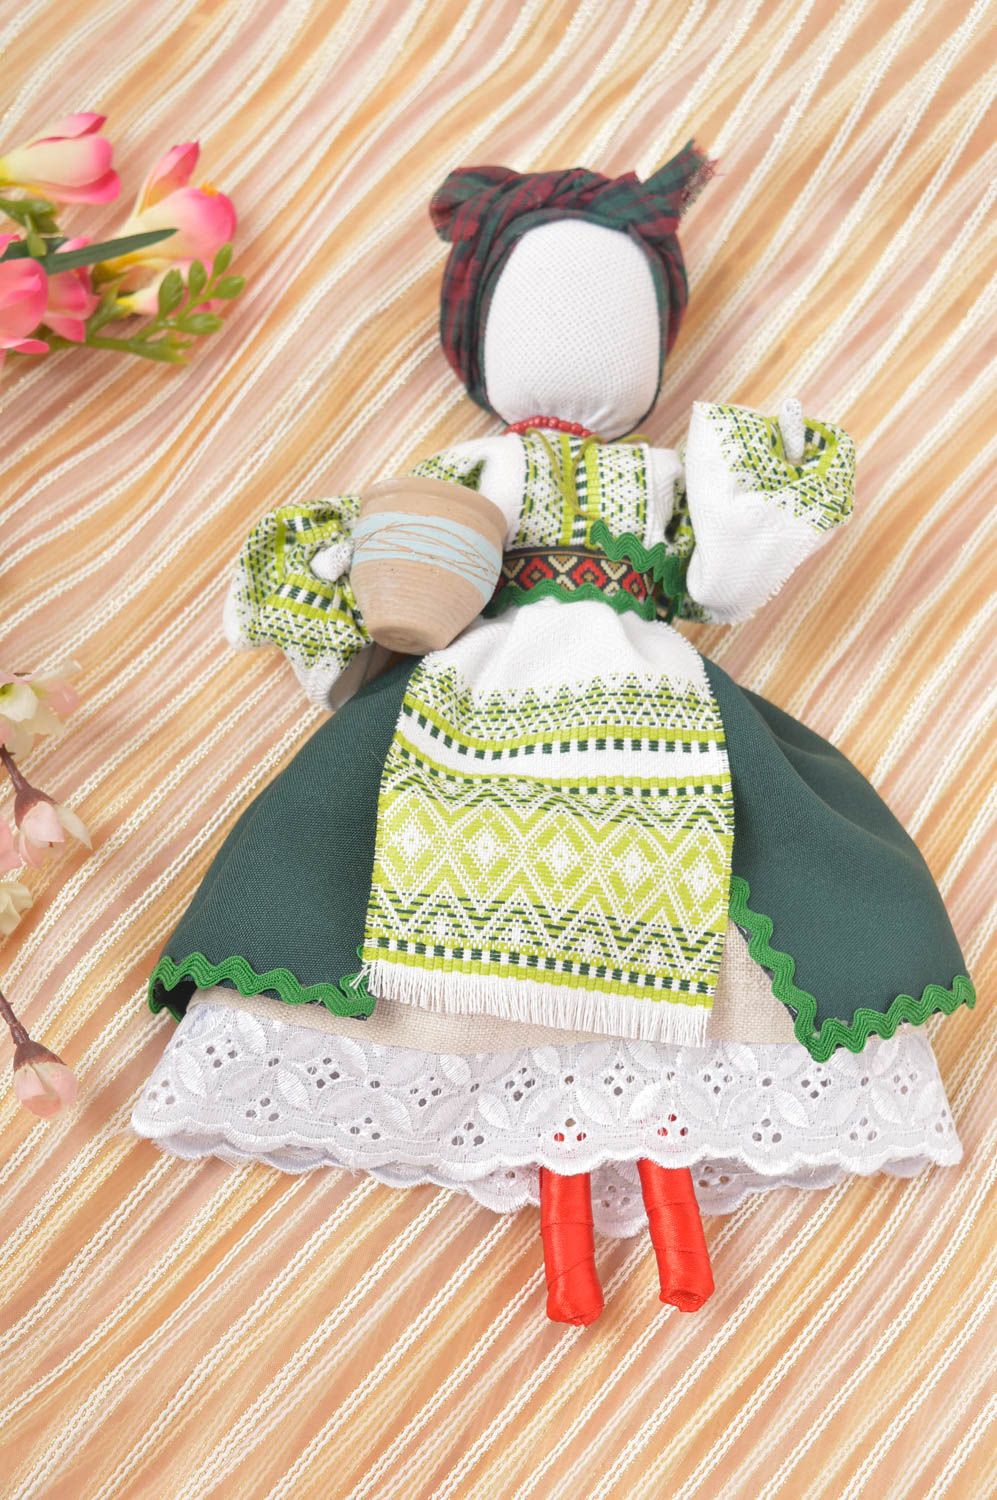 Handmade doll in ethnic dress stuffed toy designer childrens toy decor ideas photo 1